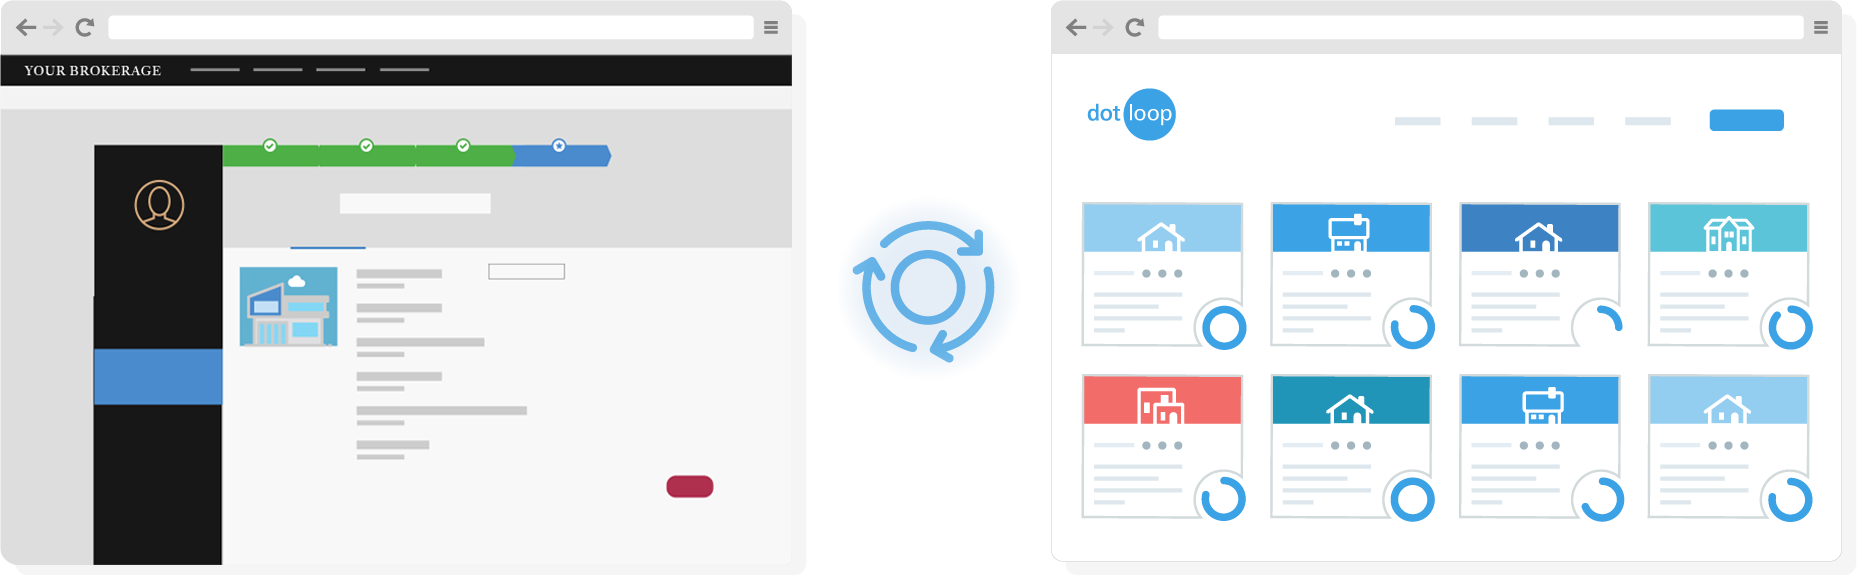 MoxiWorks integration with dotloop